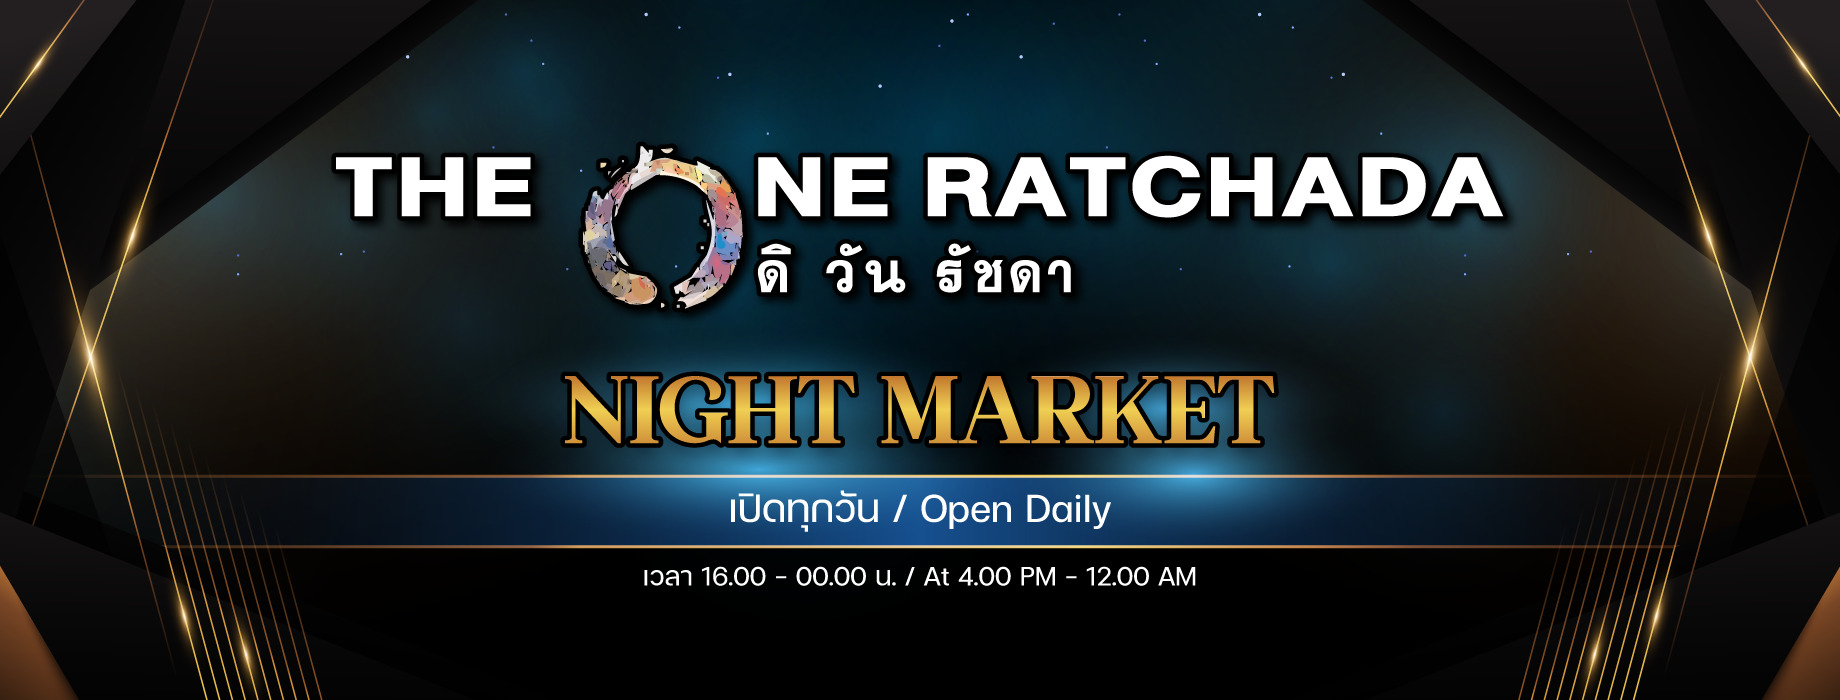 「The One Ratchada」新ナイトマーケットがエスプラナード・ラチャダー裏でオープンへ